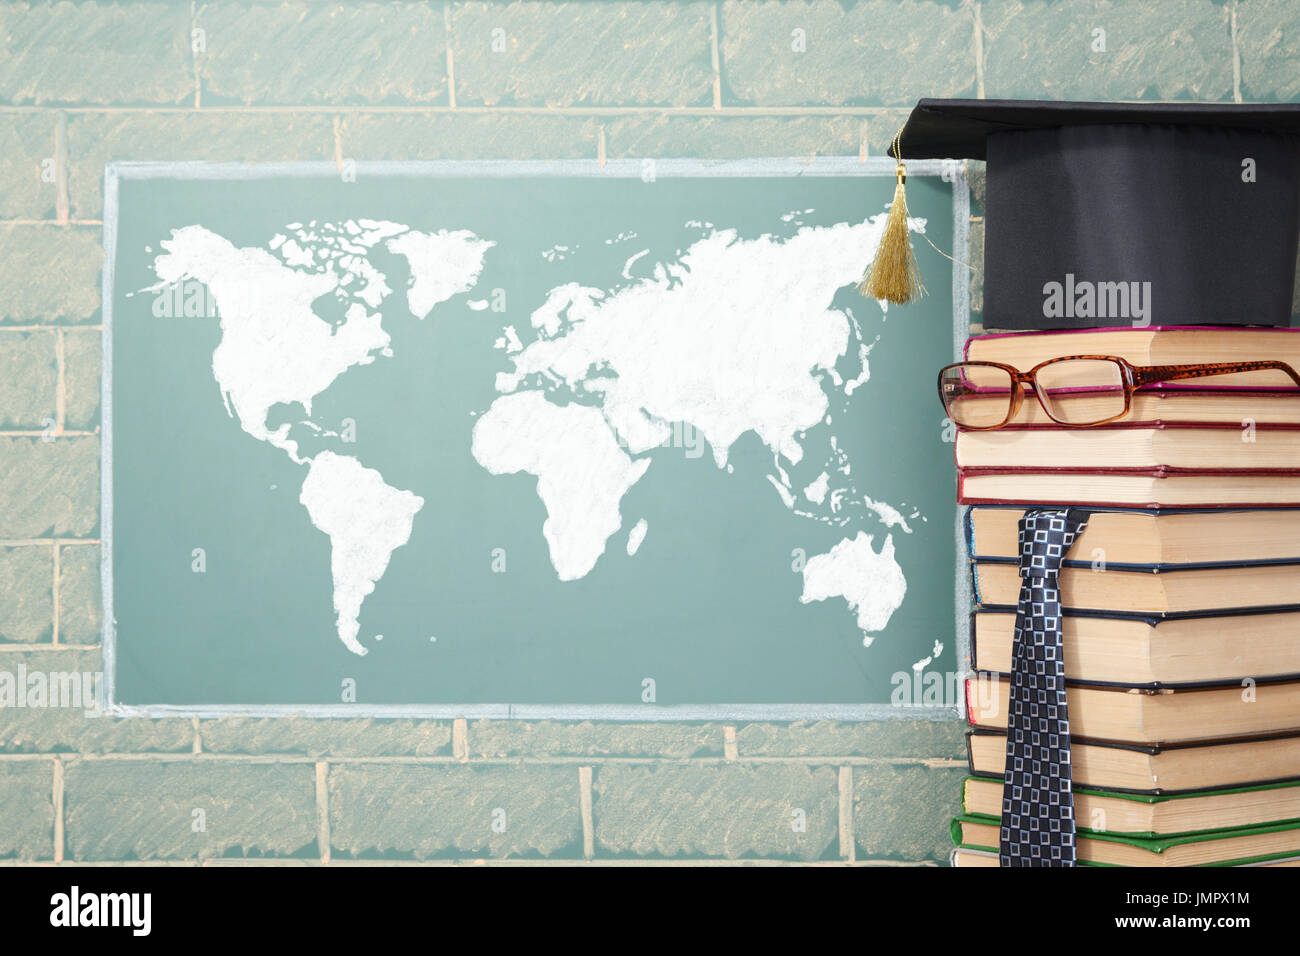 World map and unusual teacher Stock Photo